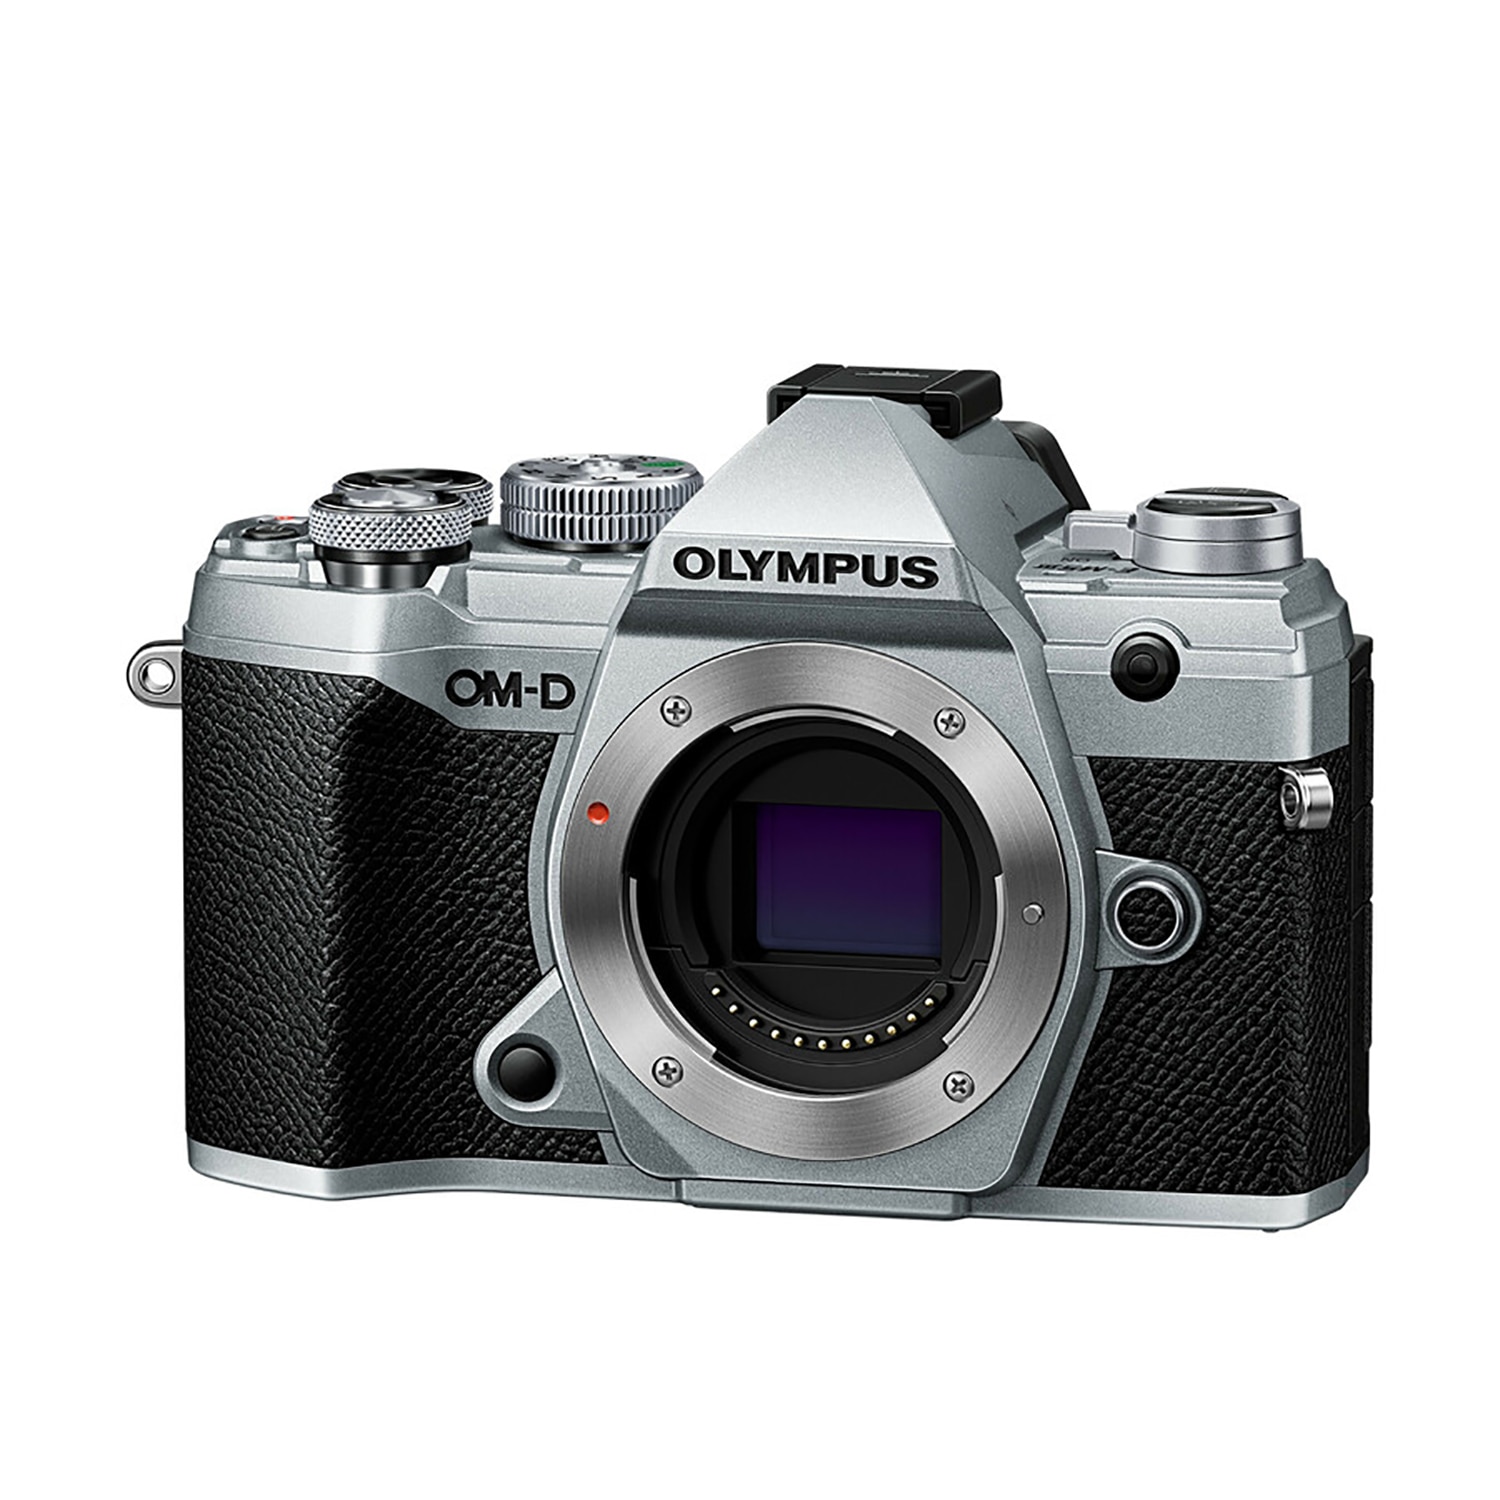 Olympus OM-D E-M5 Mark III 20.4 Megapixel Mirrorless Camera Body